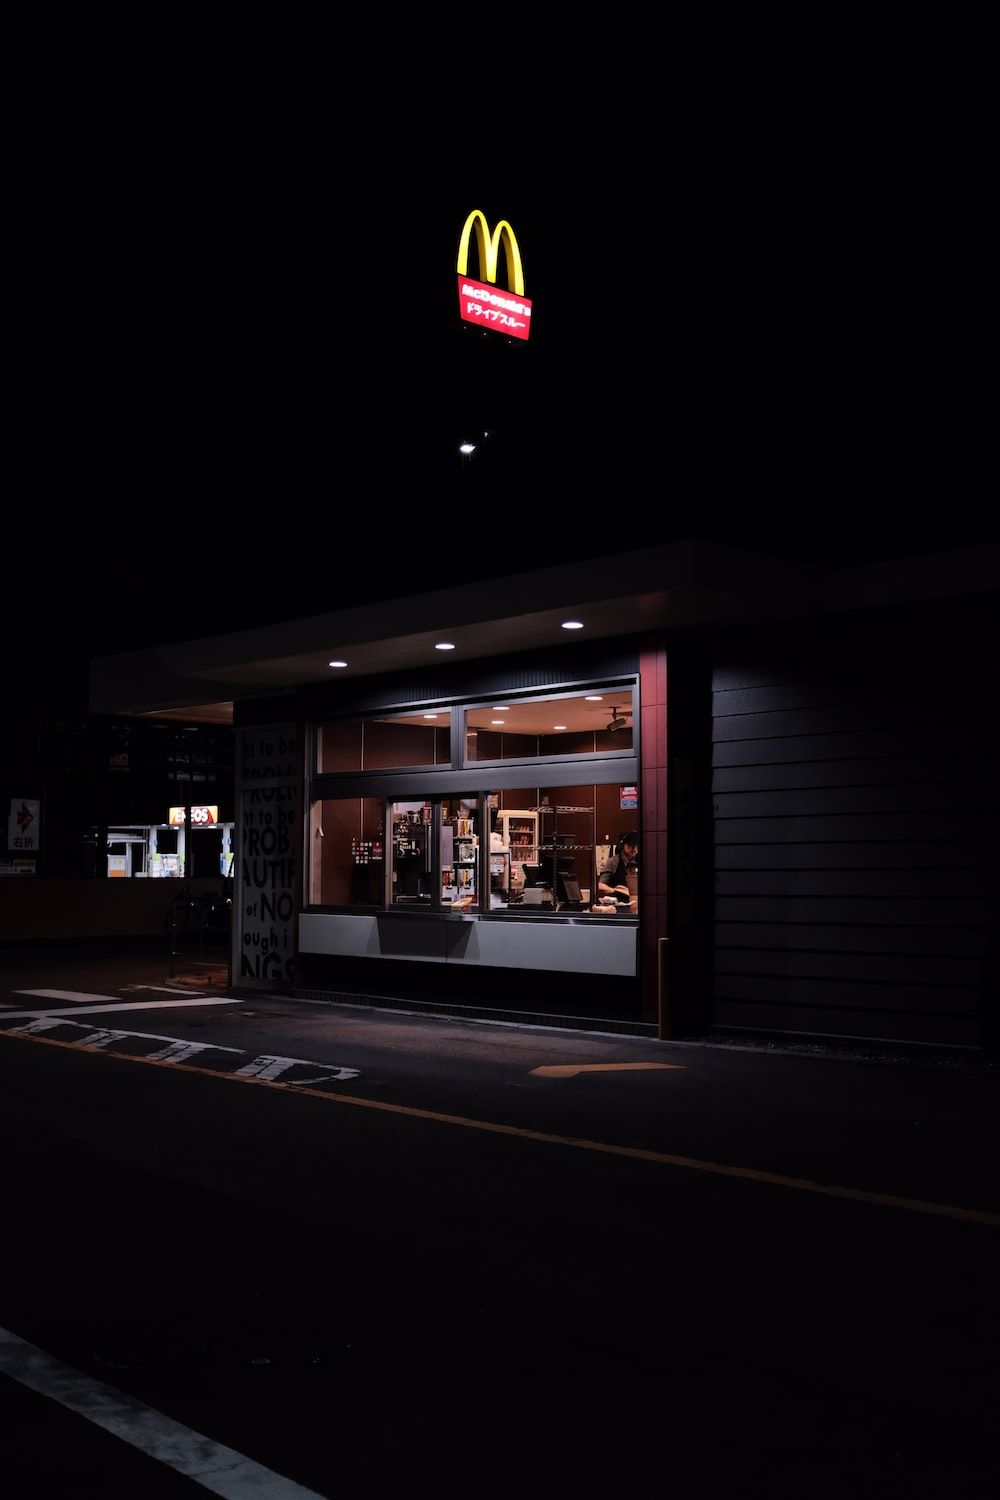  McDonald's Hintergrundbild 1000x1500. lighted McDonalds building at night photo